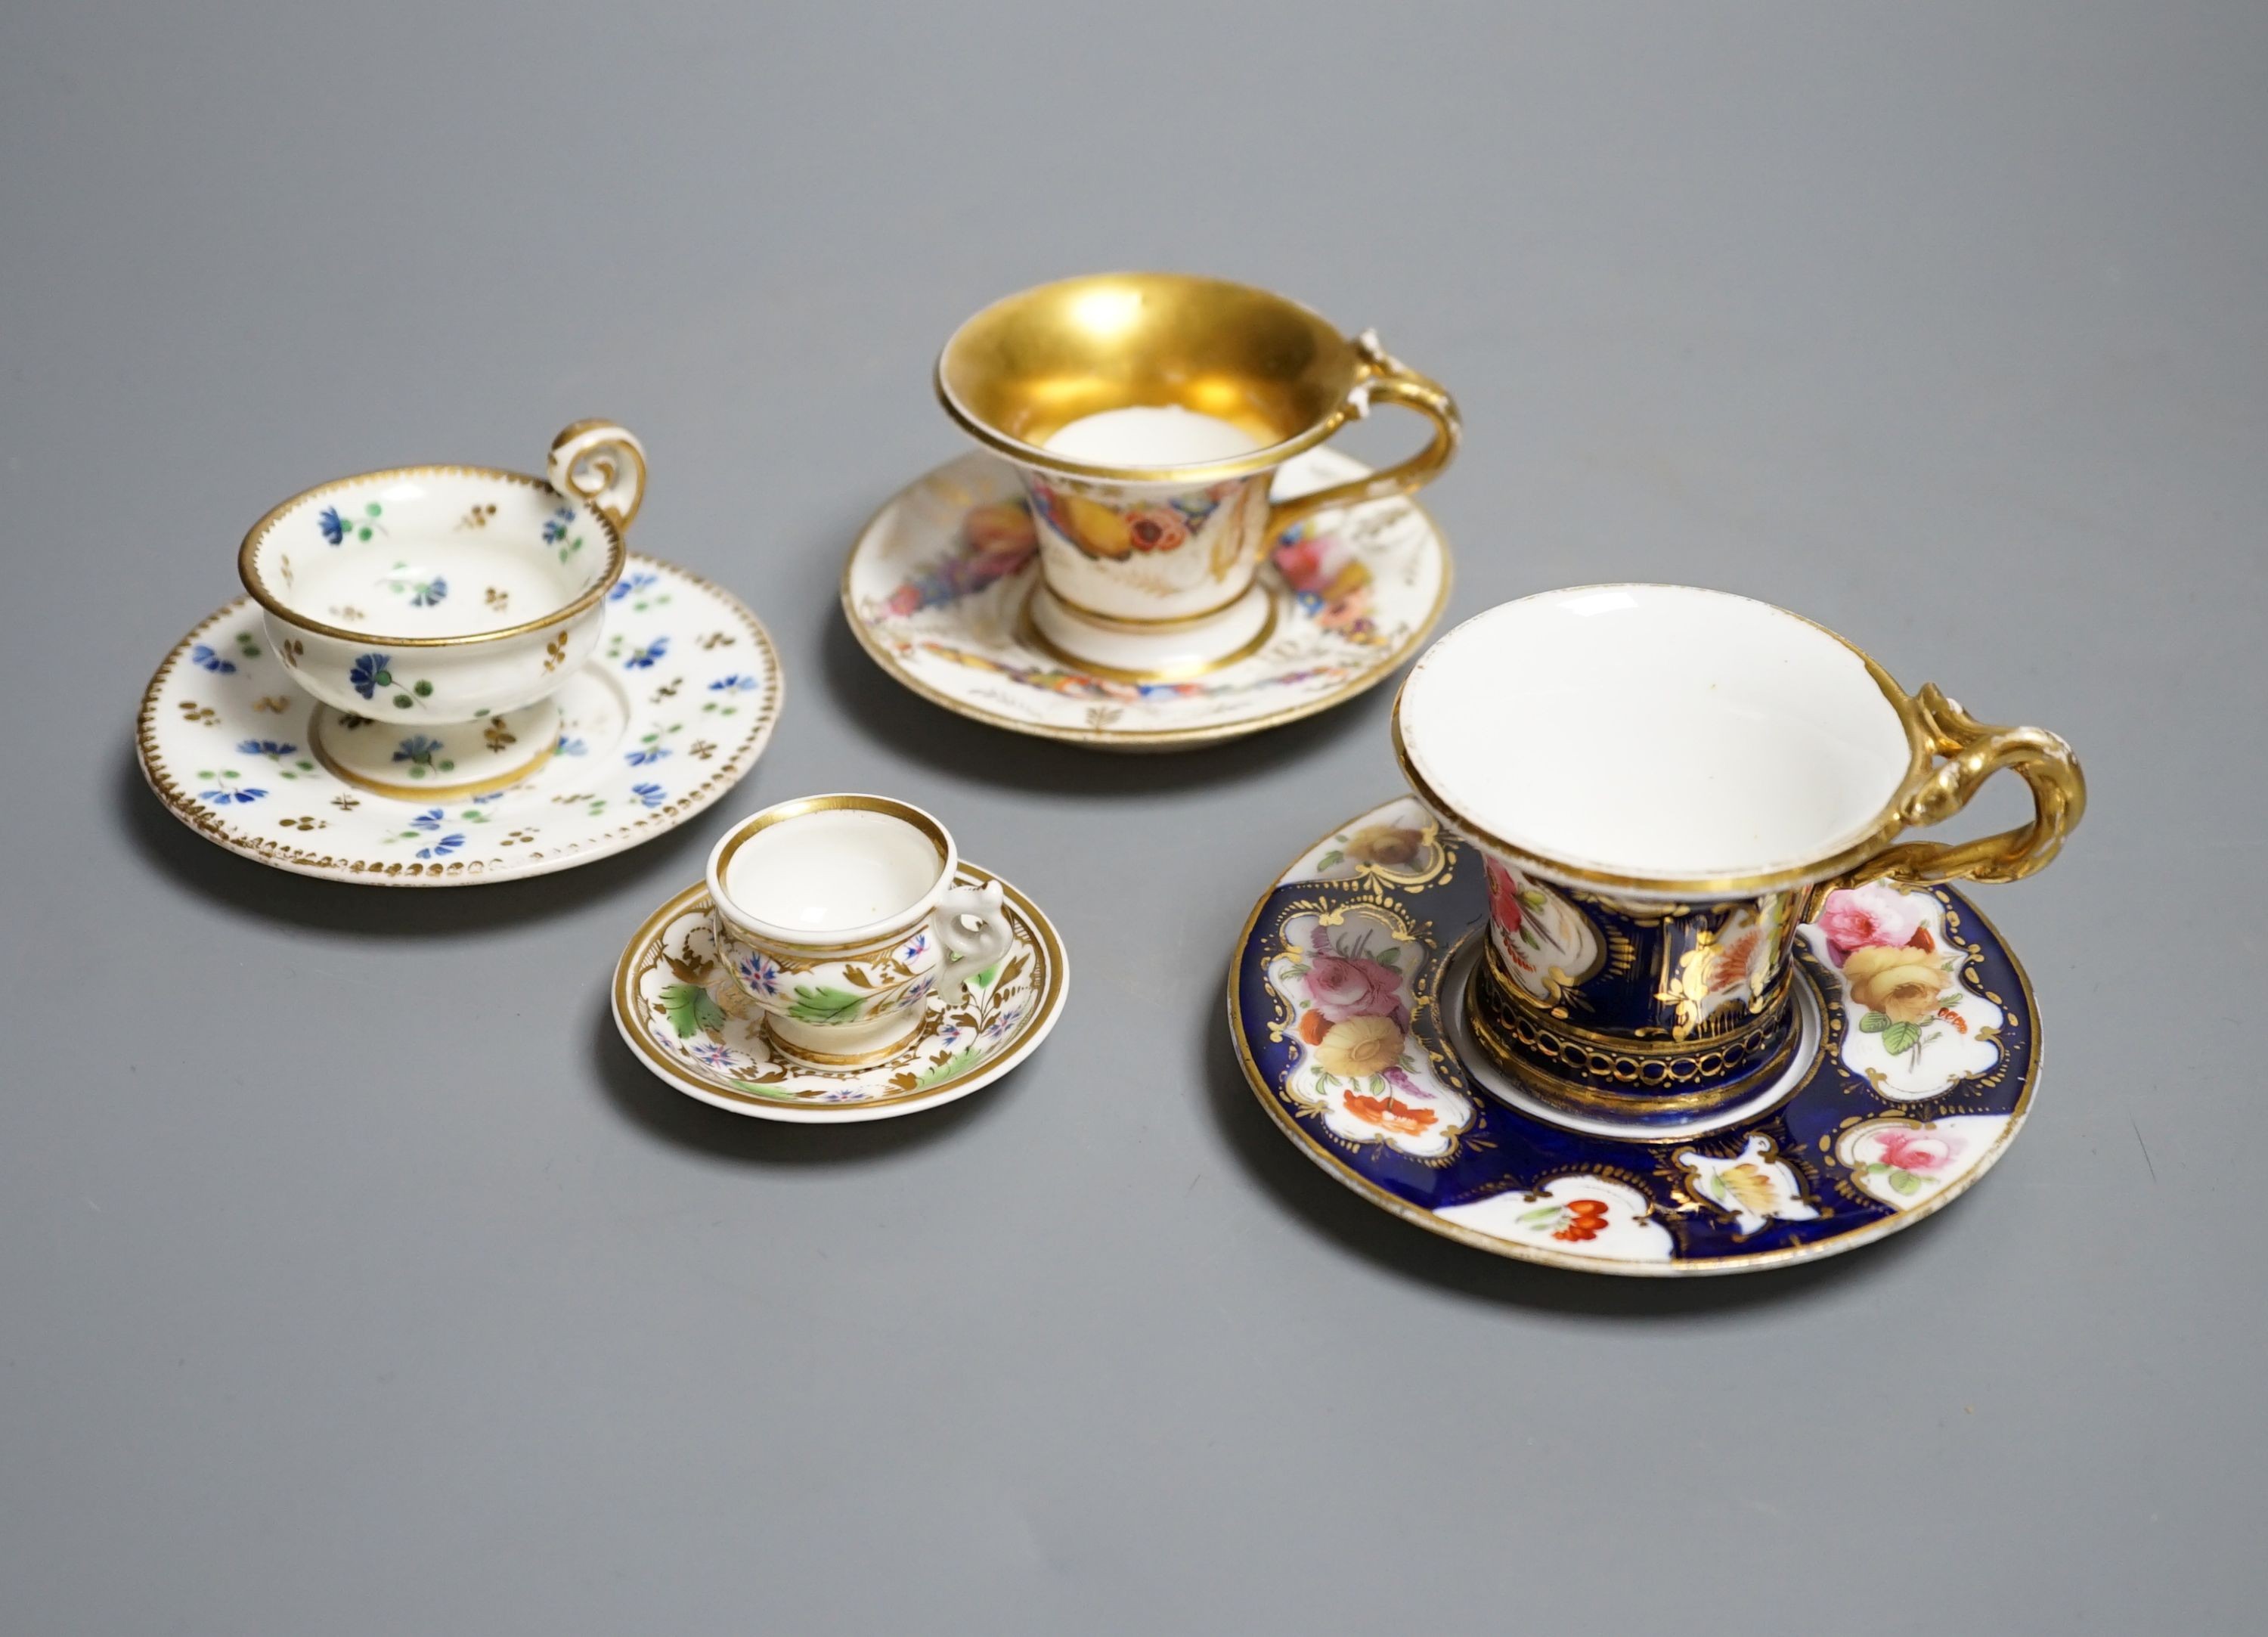 Four Coalport miniature teacups and saucers, c. 1820. Provenance - Mona Sattin collection of